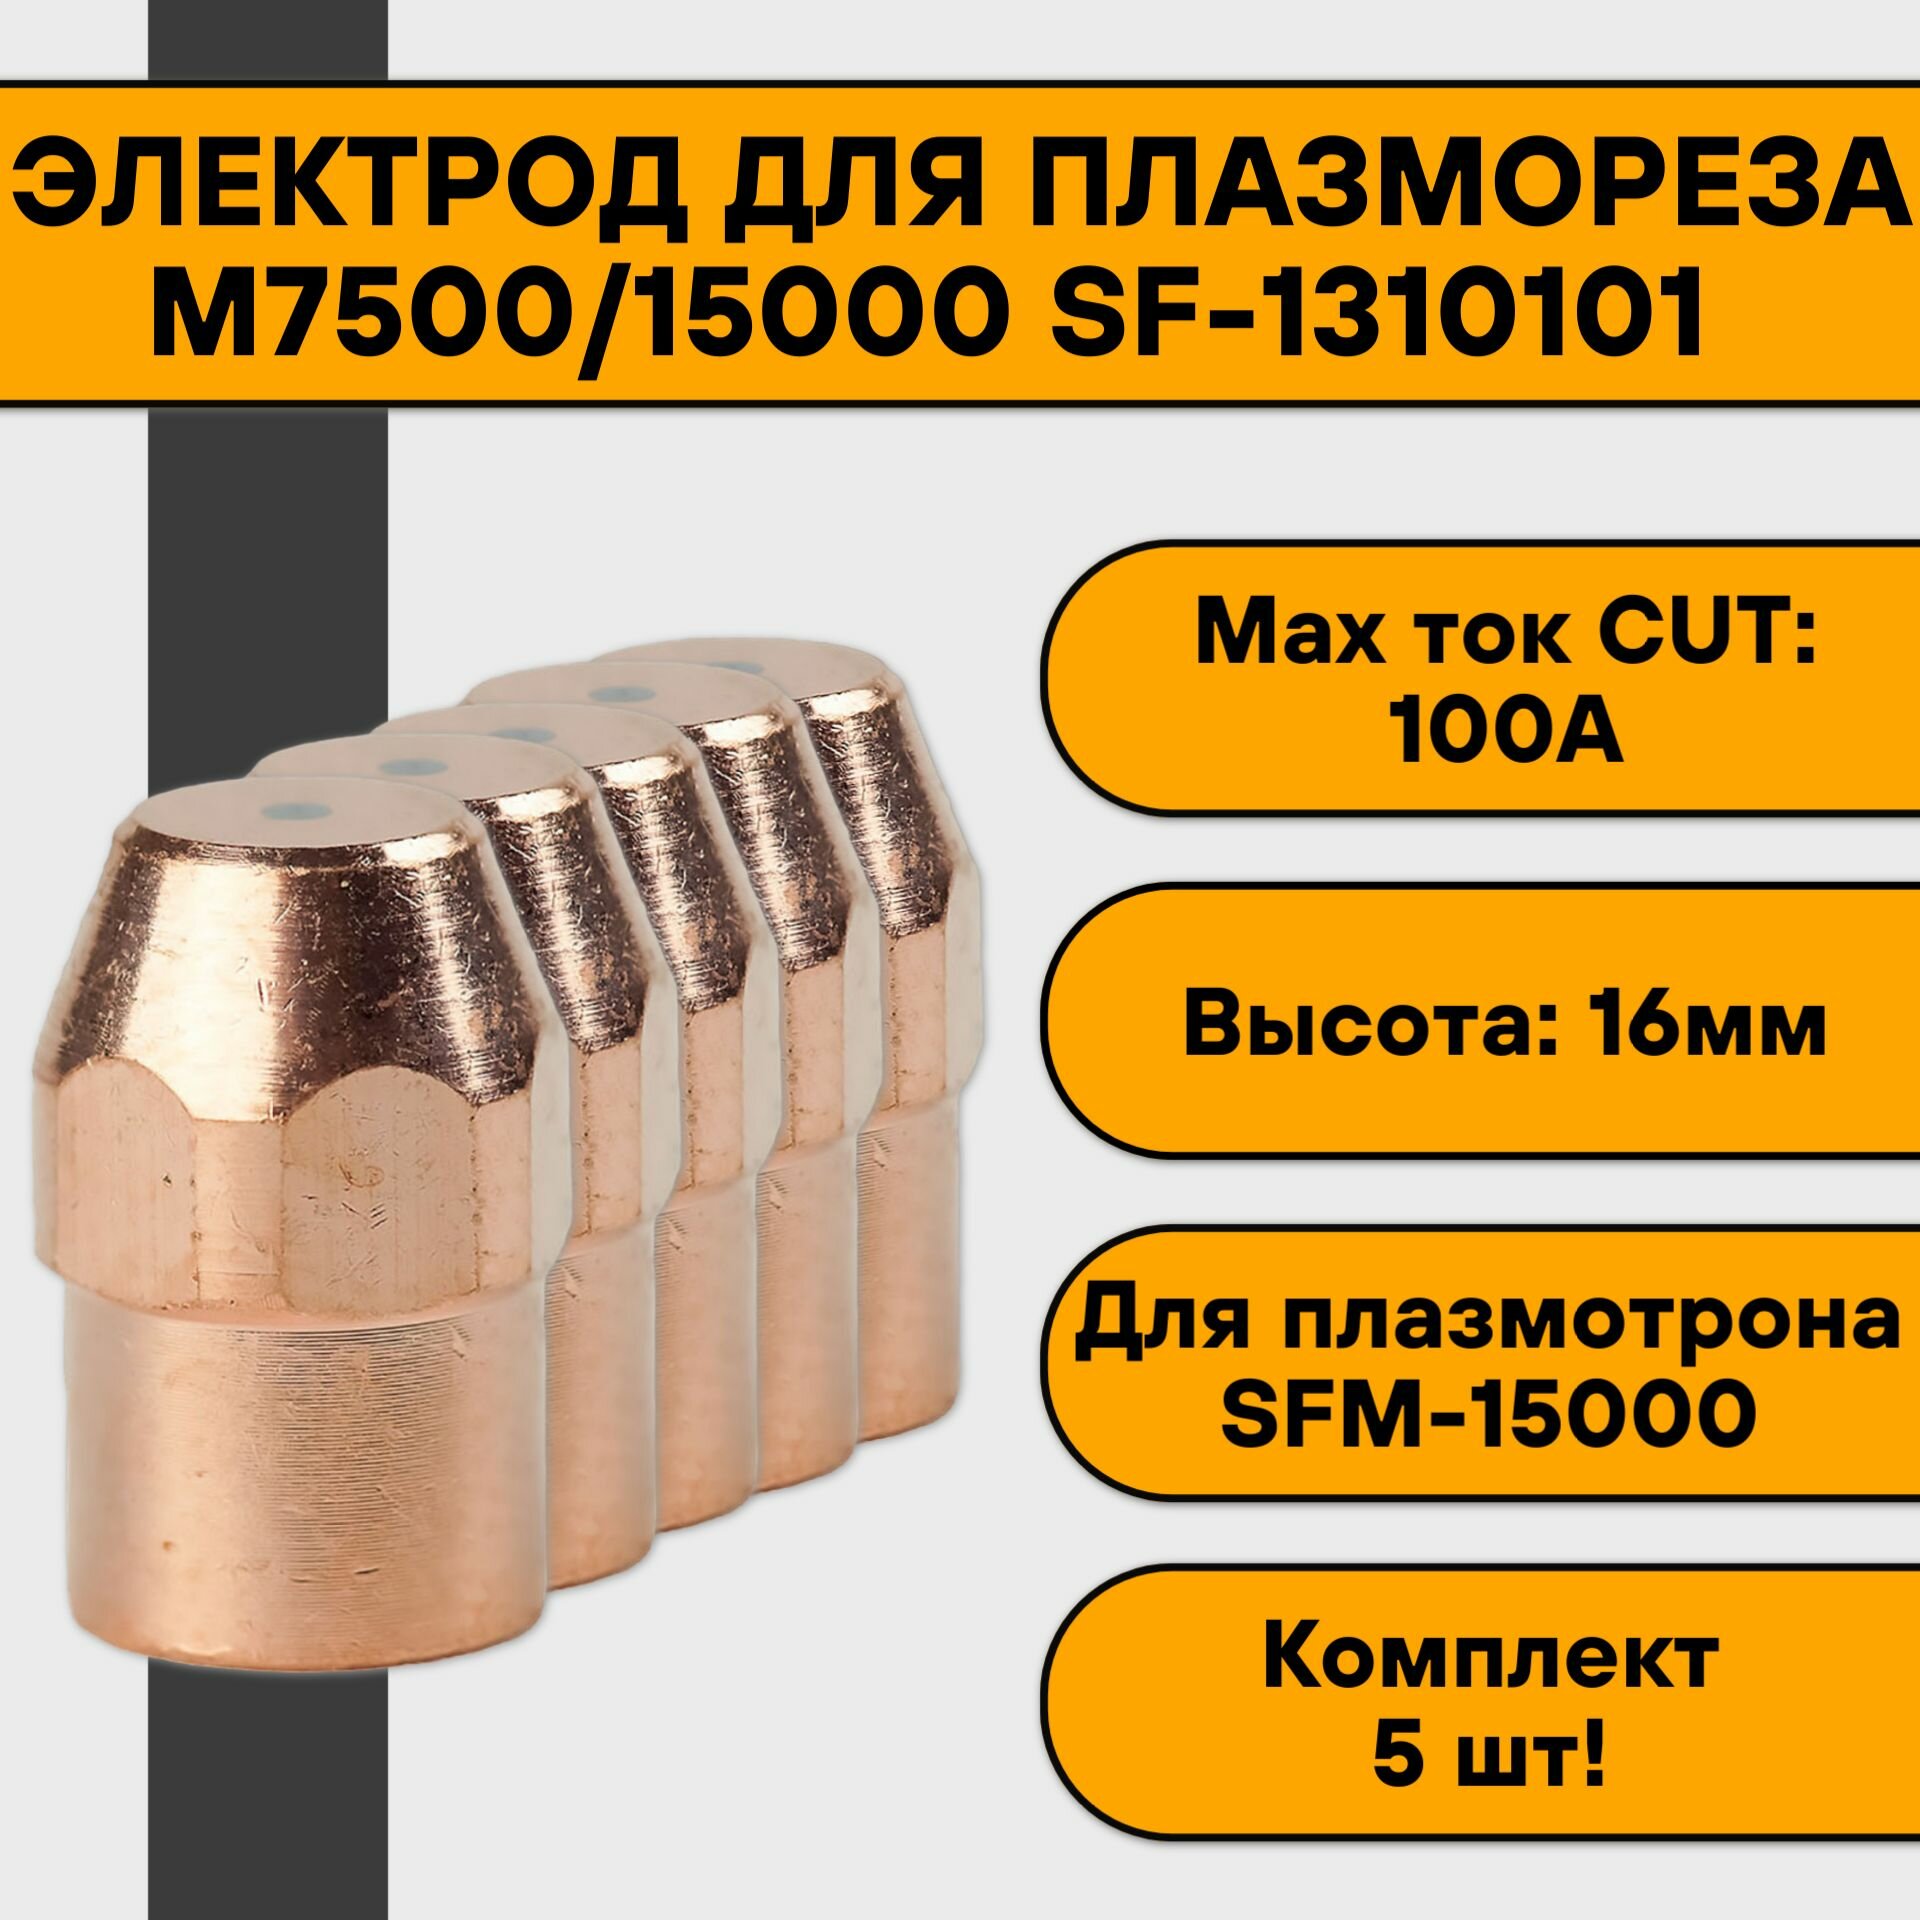 Электрод М7500/15000 SF-1310101 для плазмореза (5 шт)